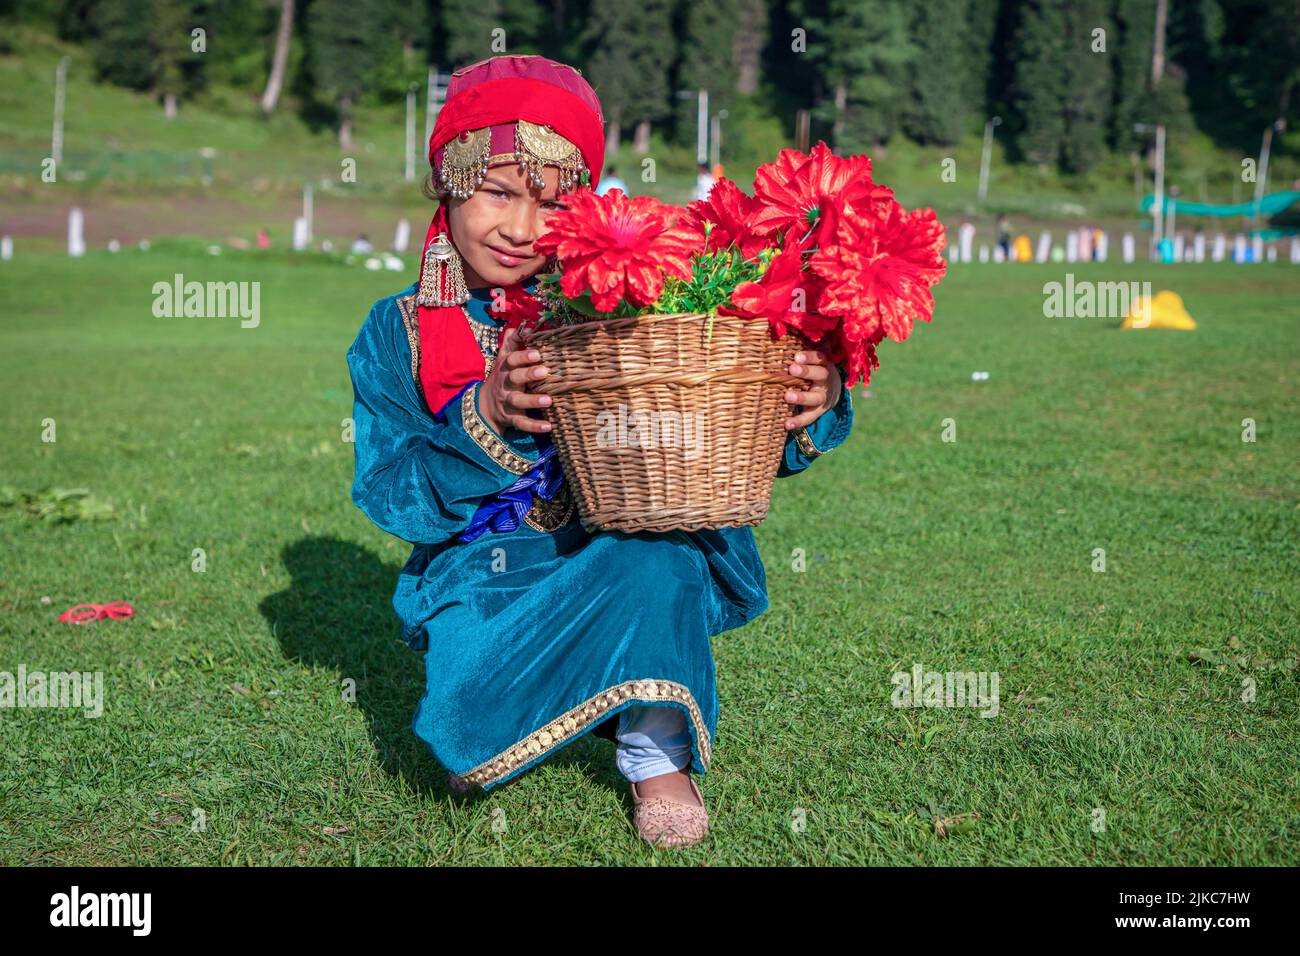 Traditional Dress of Kashmir For Men Women - Lifestyle Fun